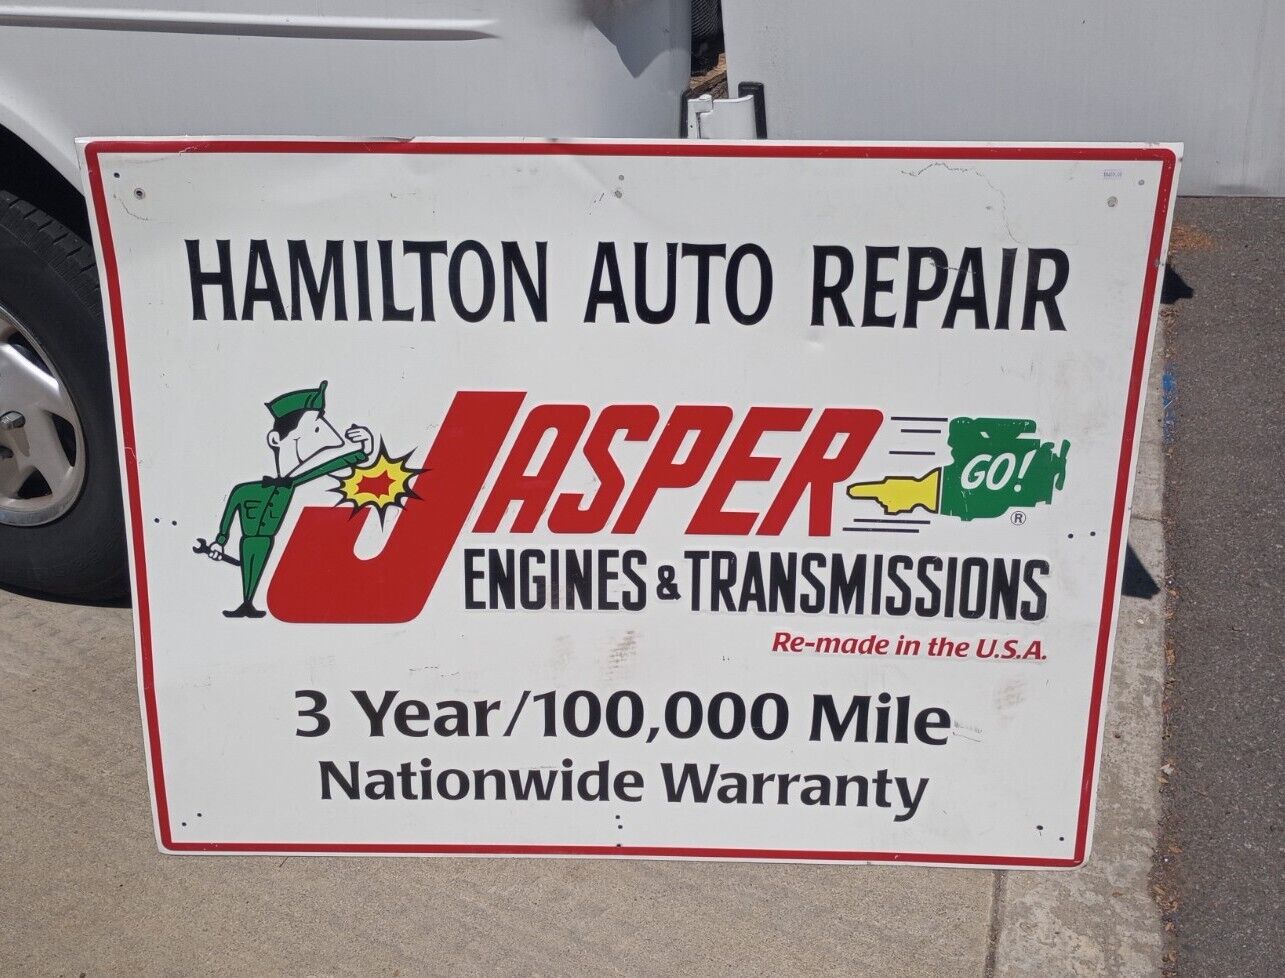 Hamilton Auto Repair. Hemet, Calif. Jasper Engines. 36x48 Large Metal Sign 1979